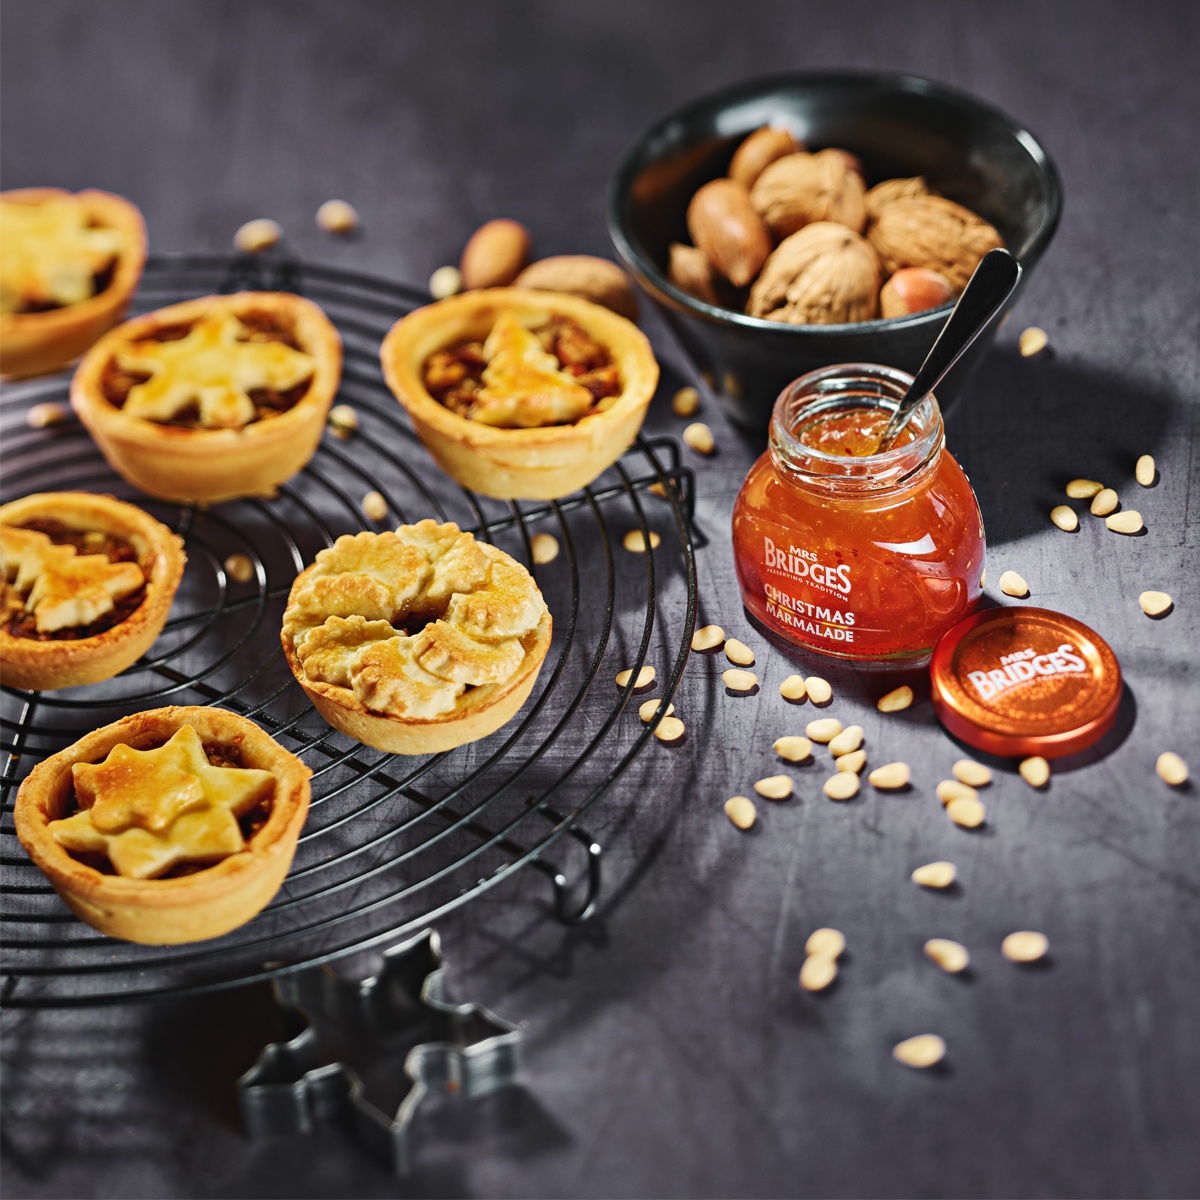 Top Food Feinkost - Rezept Mince Pies mit Mrs Bridges Christmas Marmalade